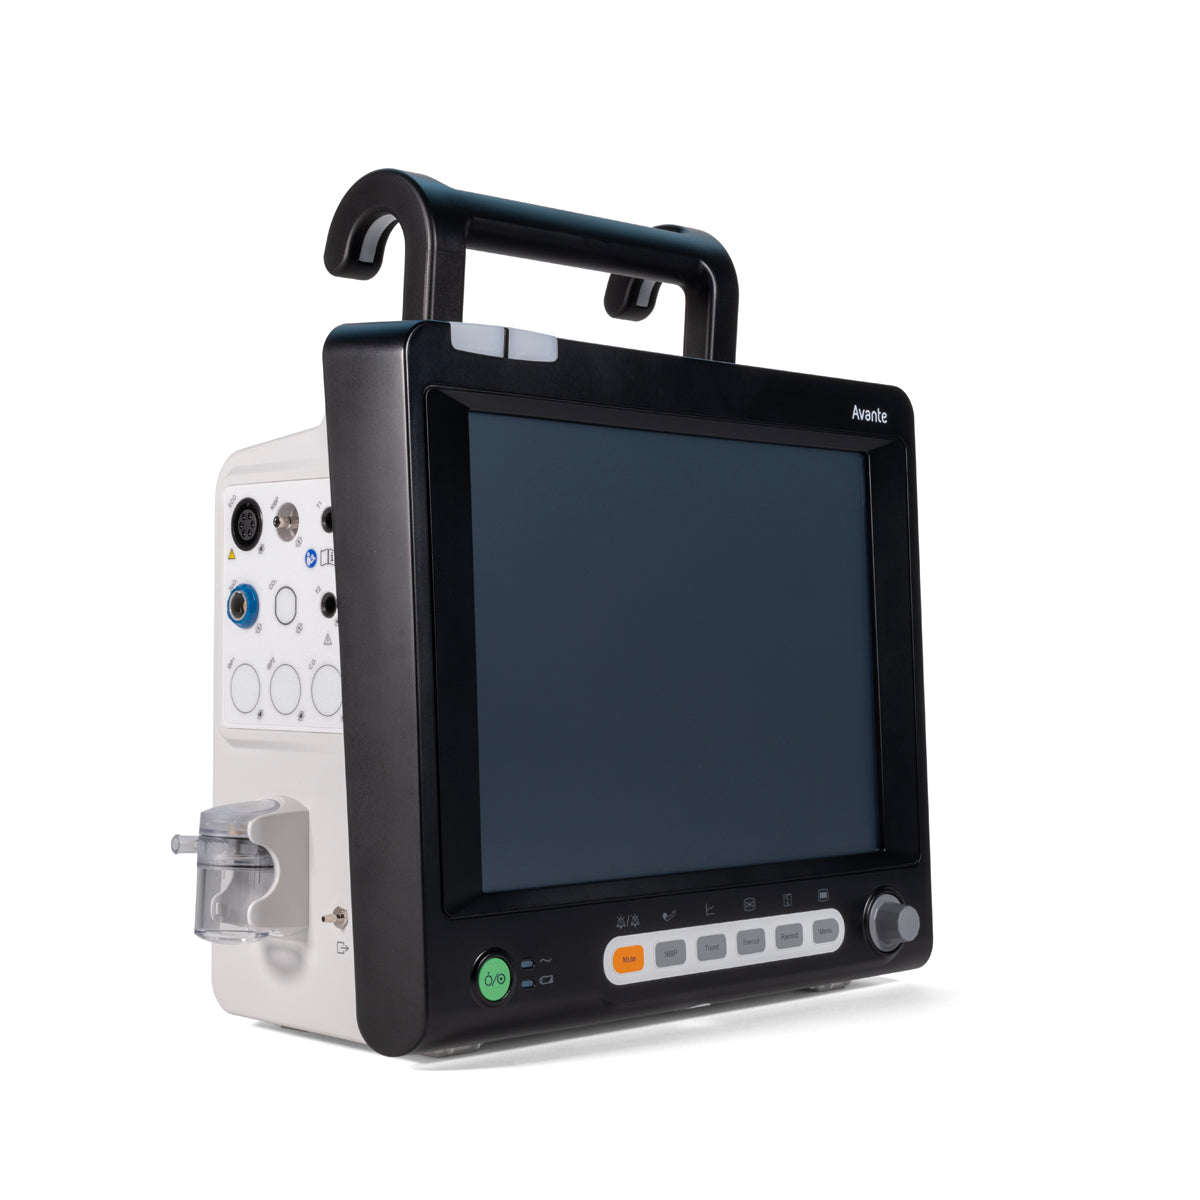 Avante Waveline EZ MAX 2 Anesthesia Monitor